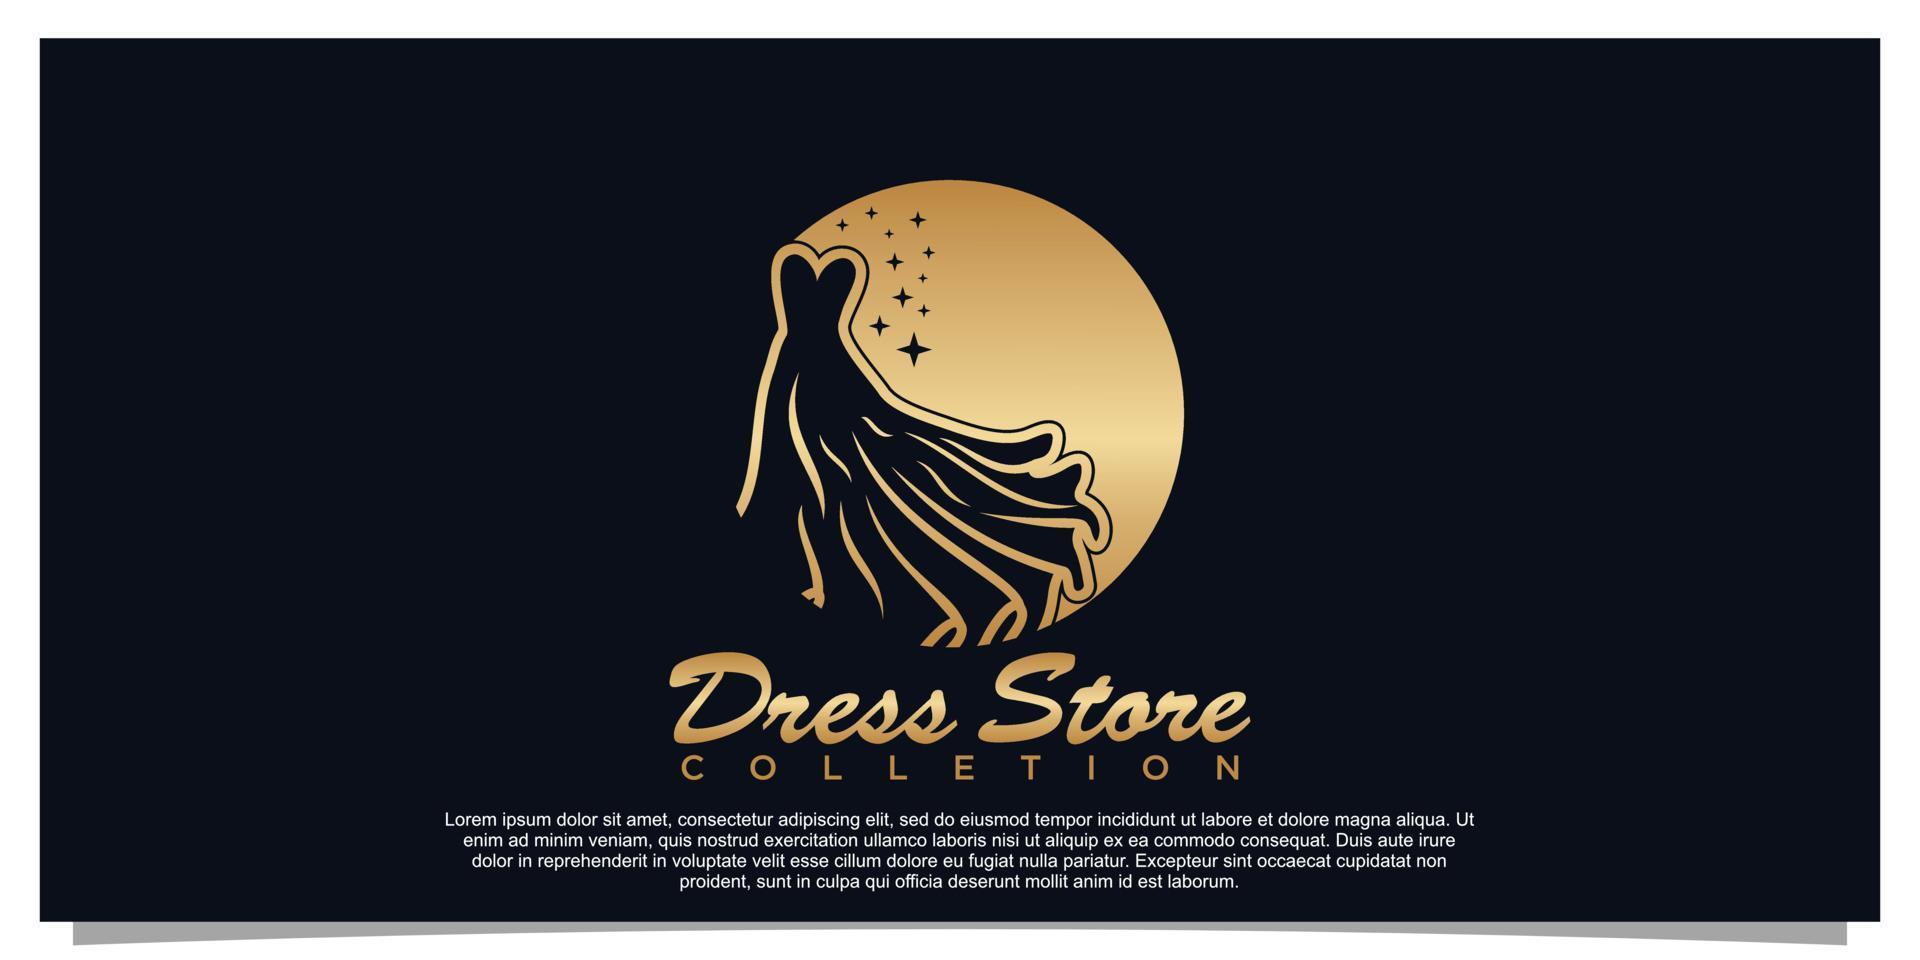 Beauty women dress fashion logo design illustration Premium Vector